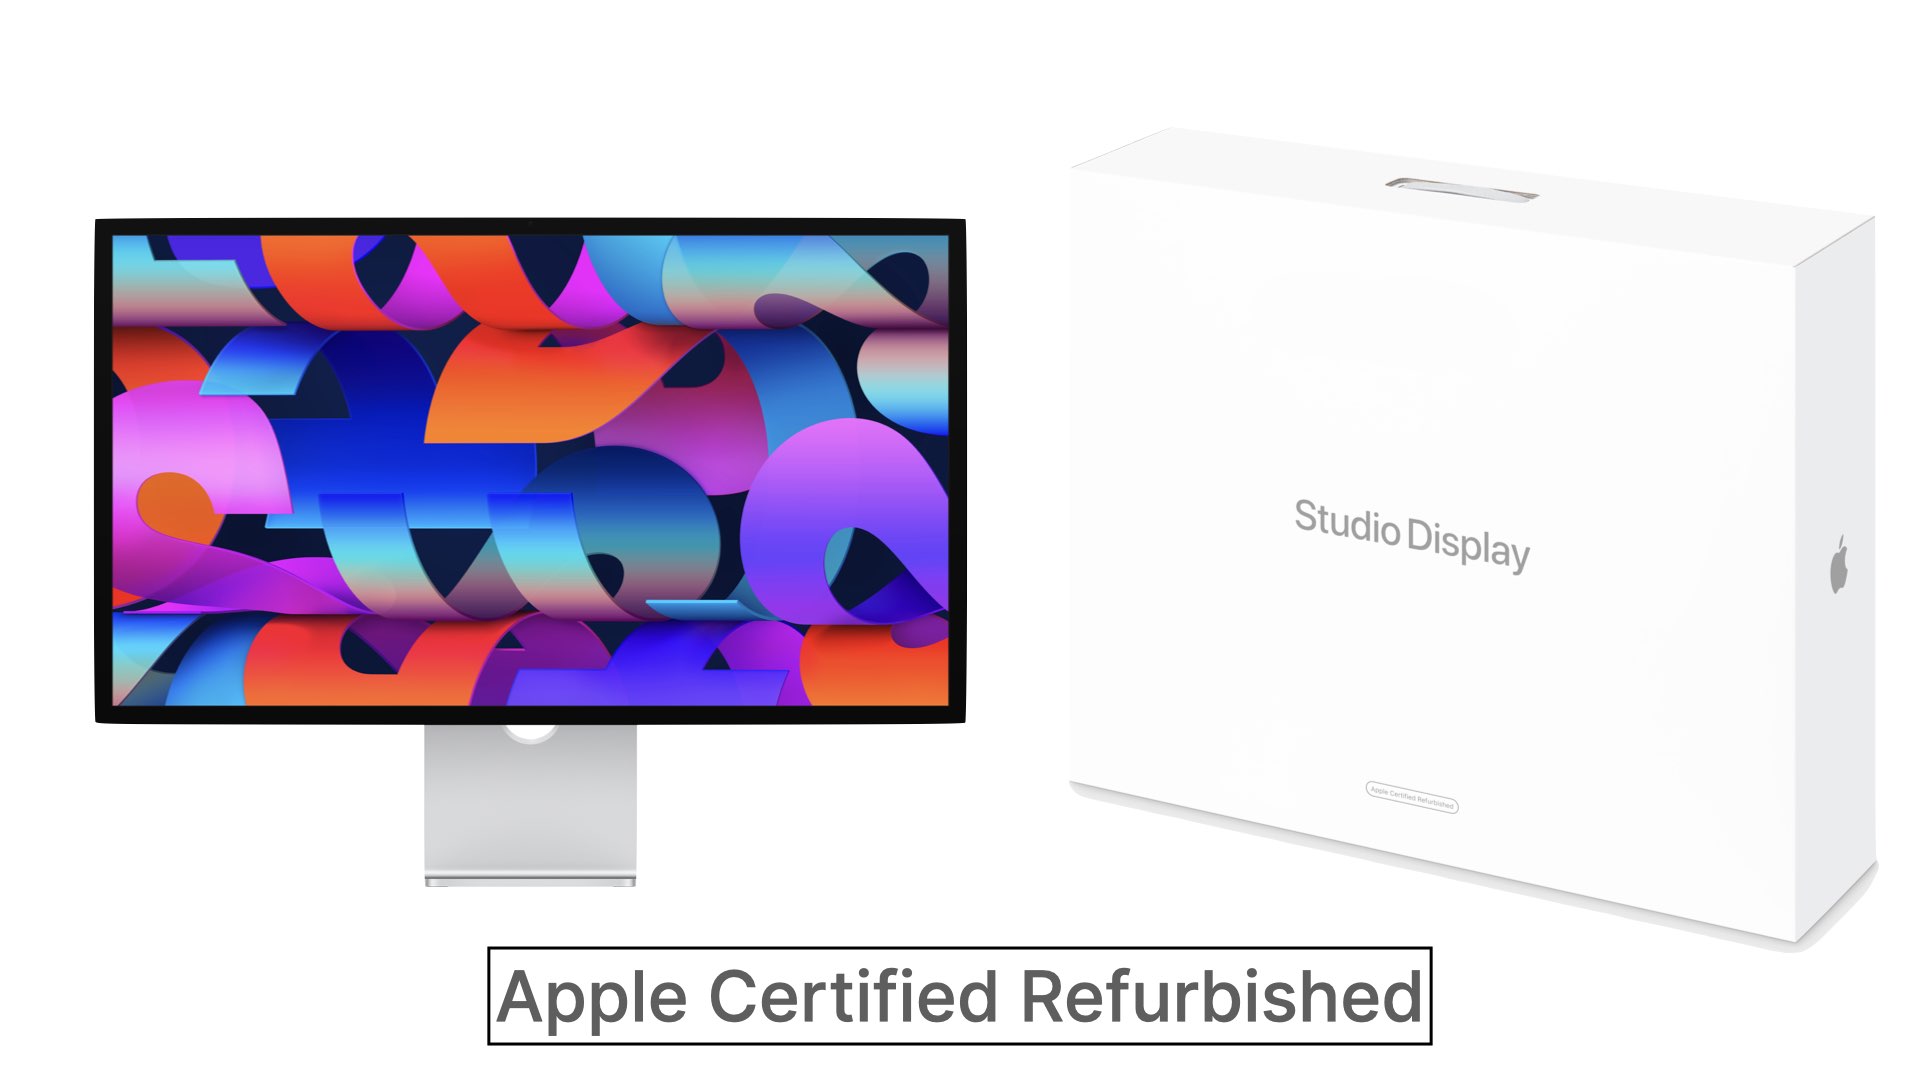 Apple's Refurbished Studio Display